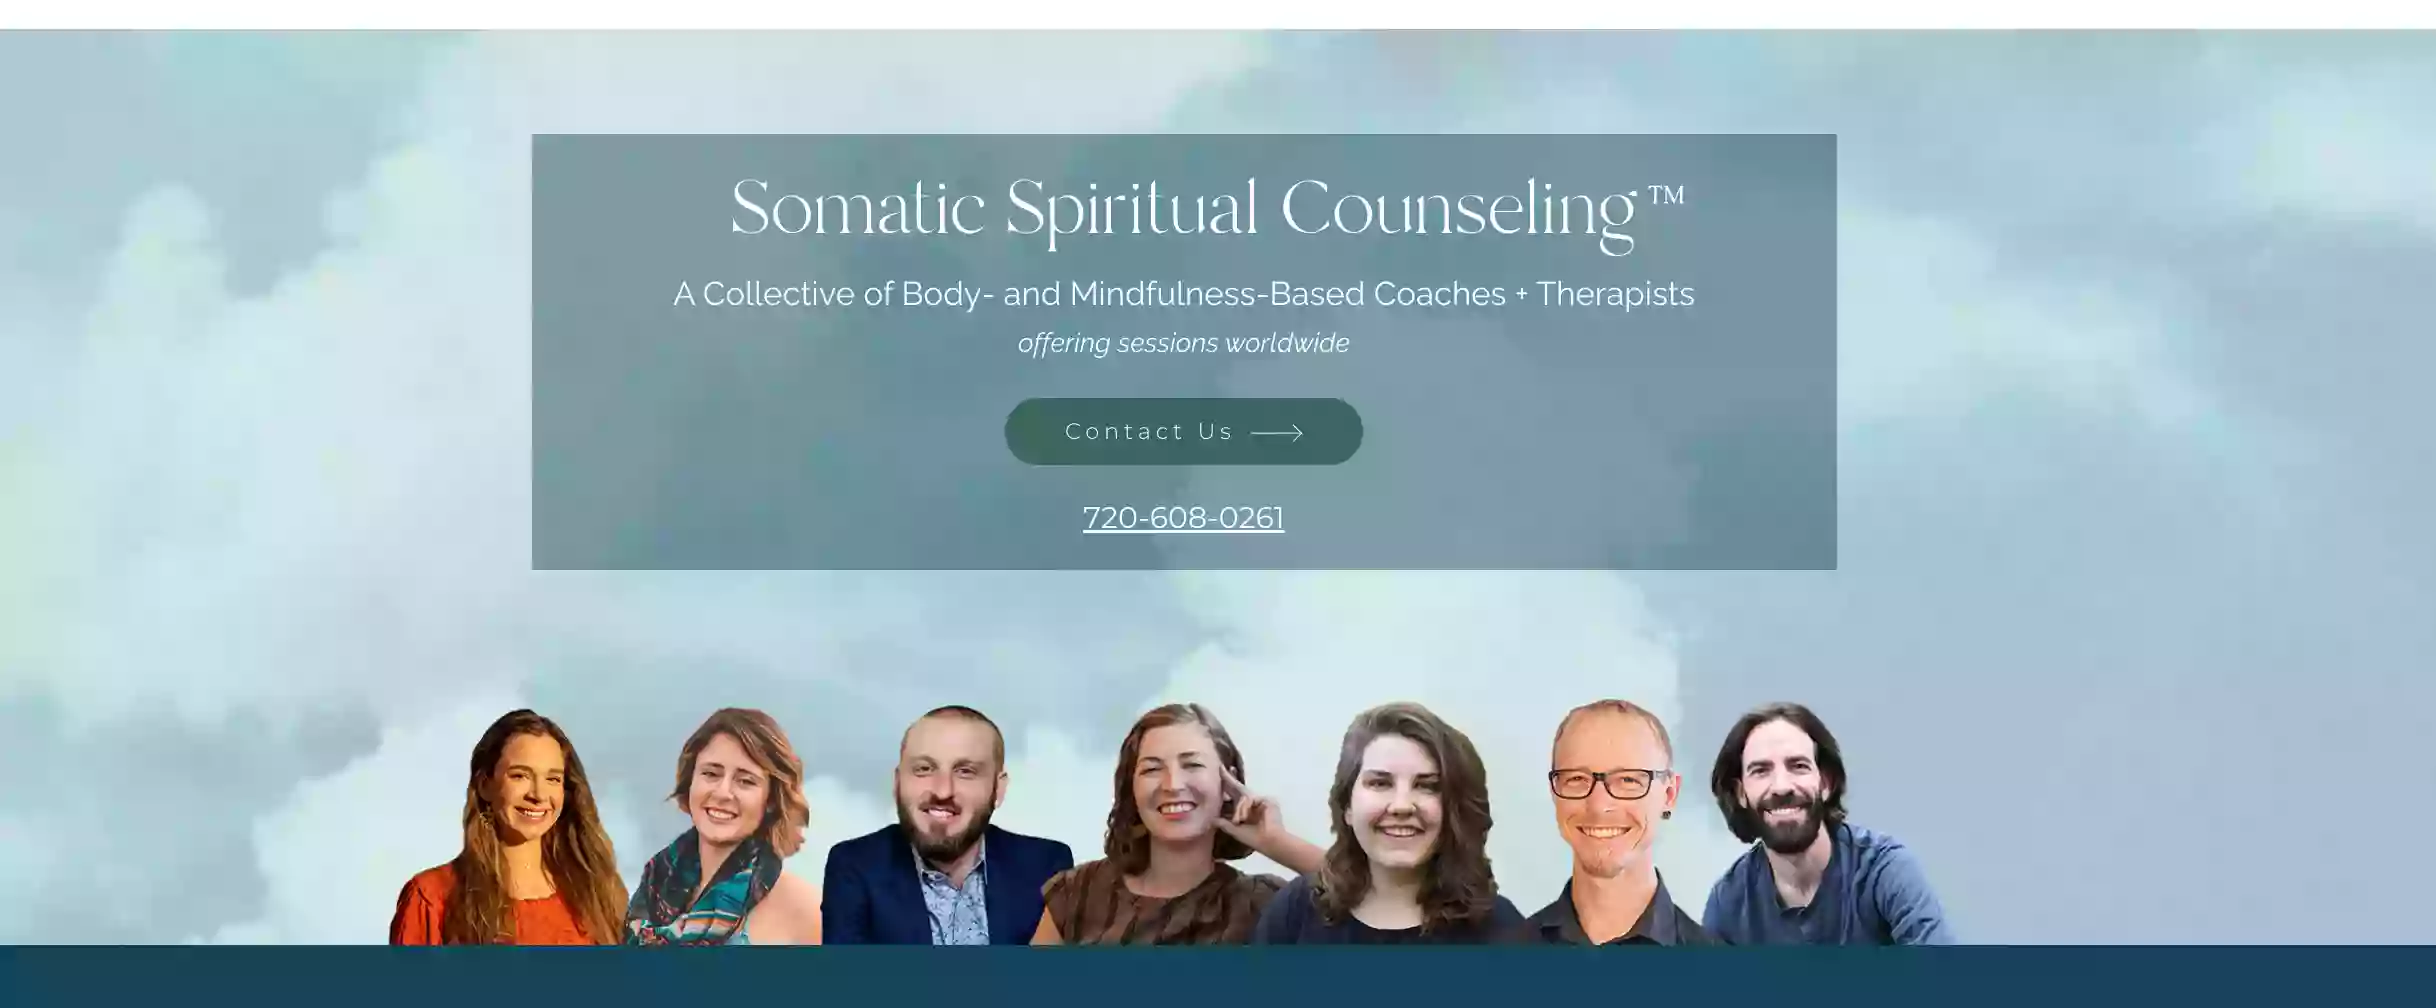 Somatic Spiritual Counseling